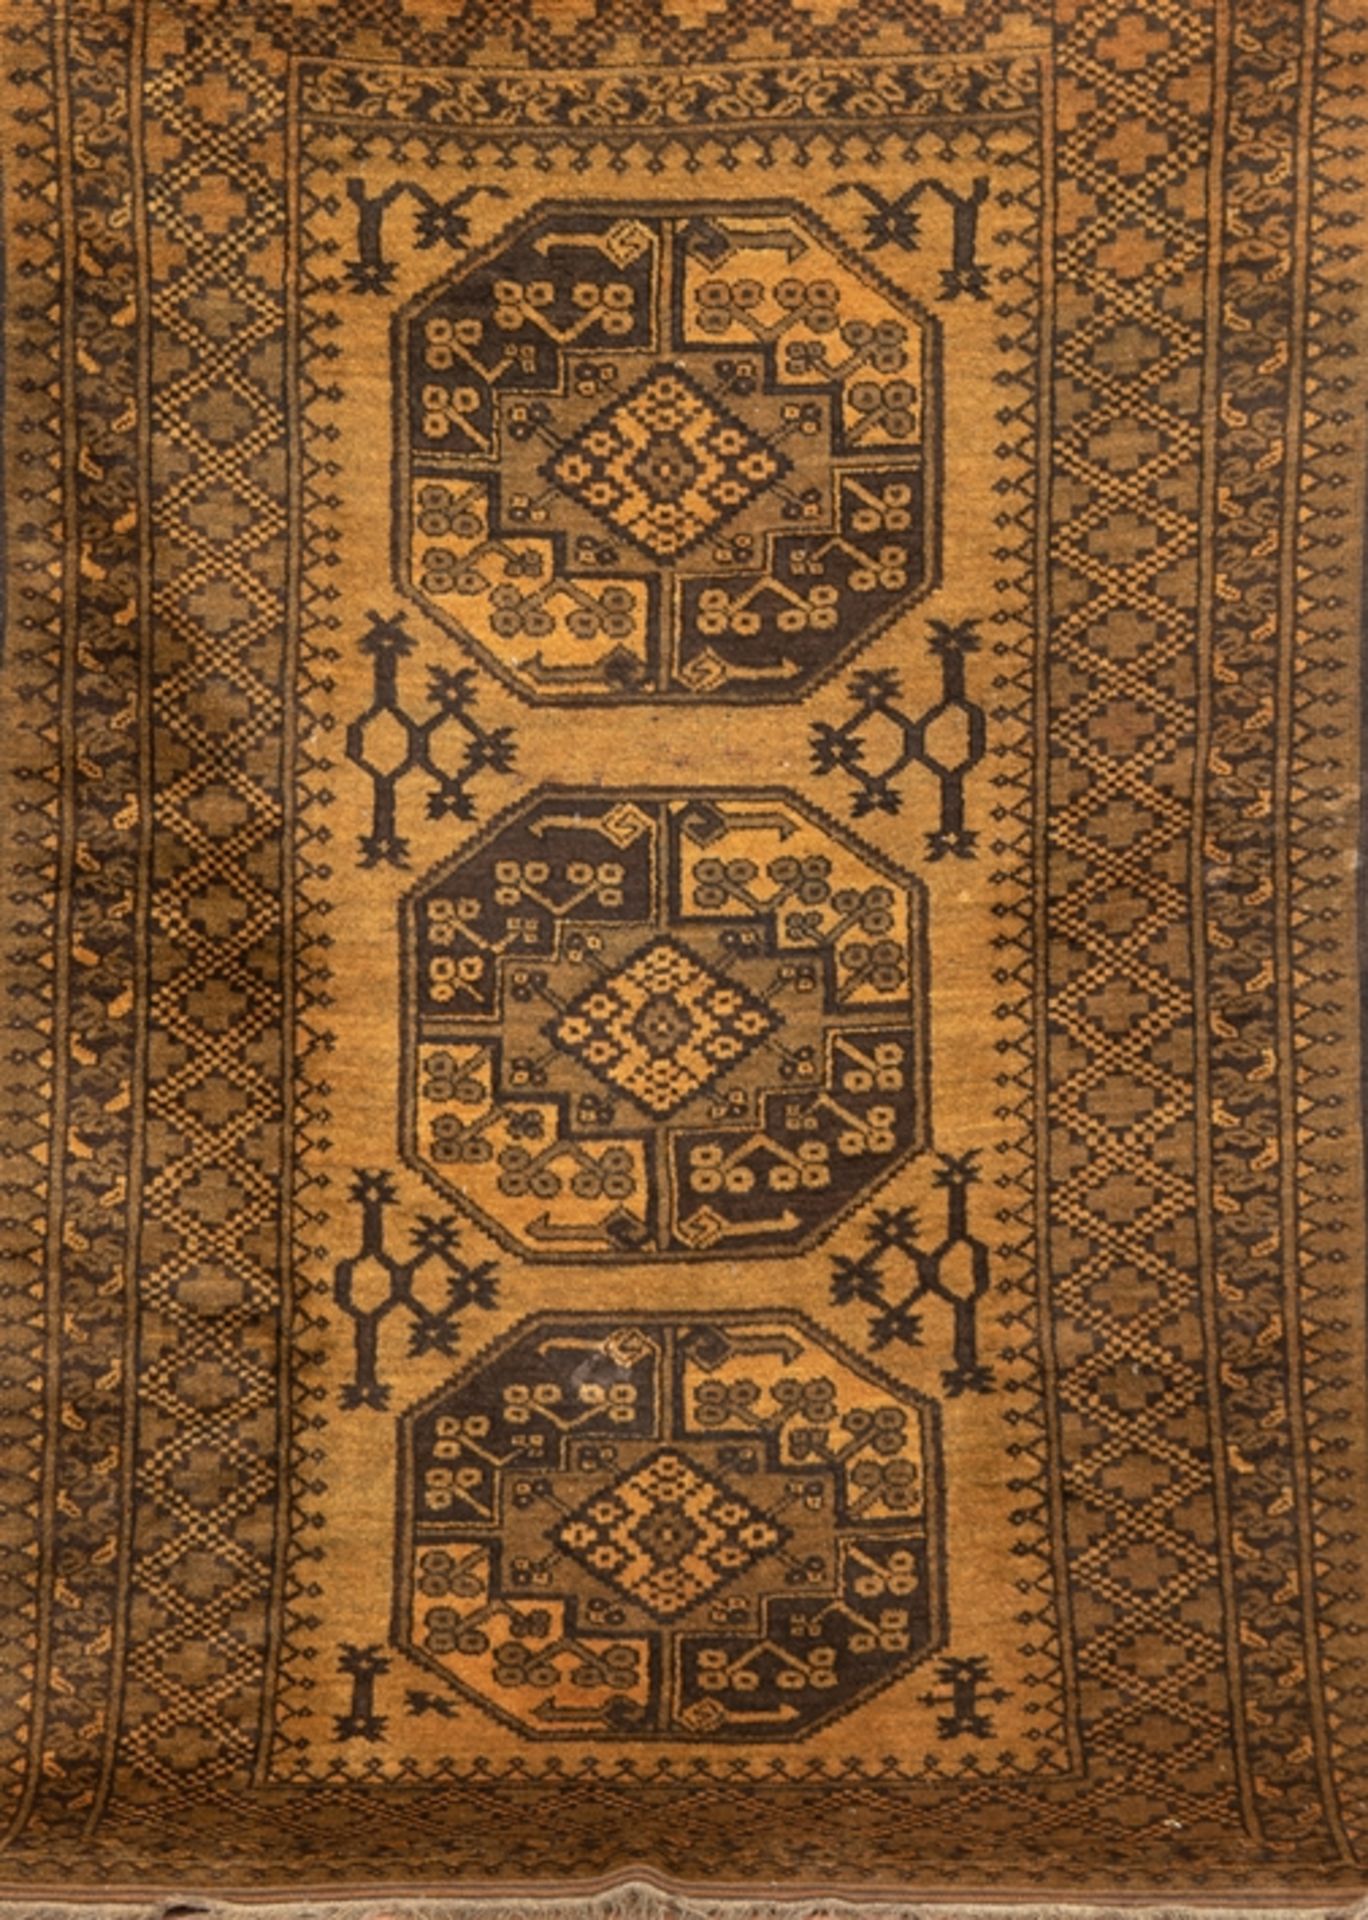 Alter Goldafghane, Ersari, mit Elefantenfuß, goldbraungrundig, mittig symmetrisch gemustert, 174x11